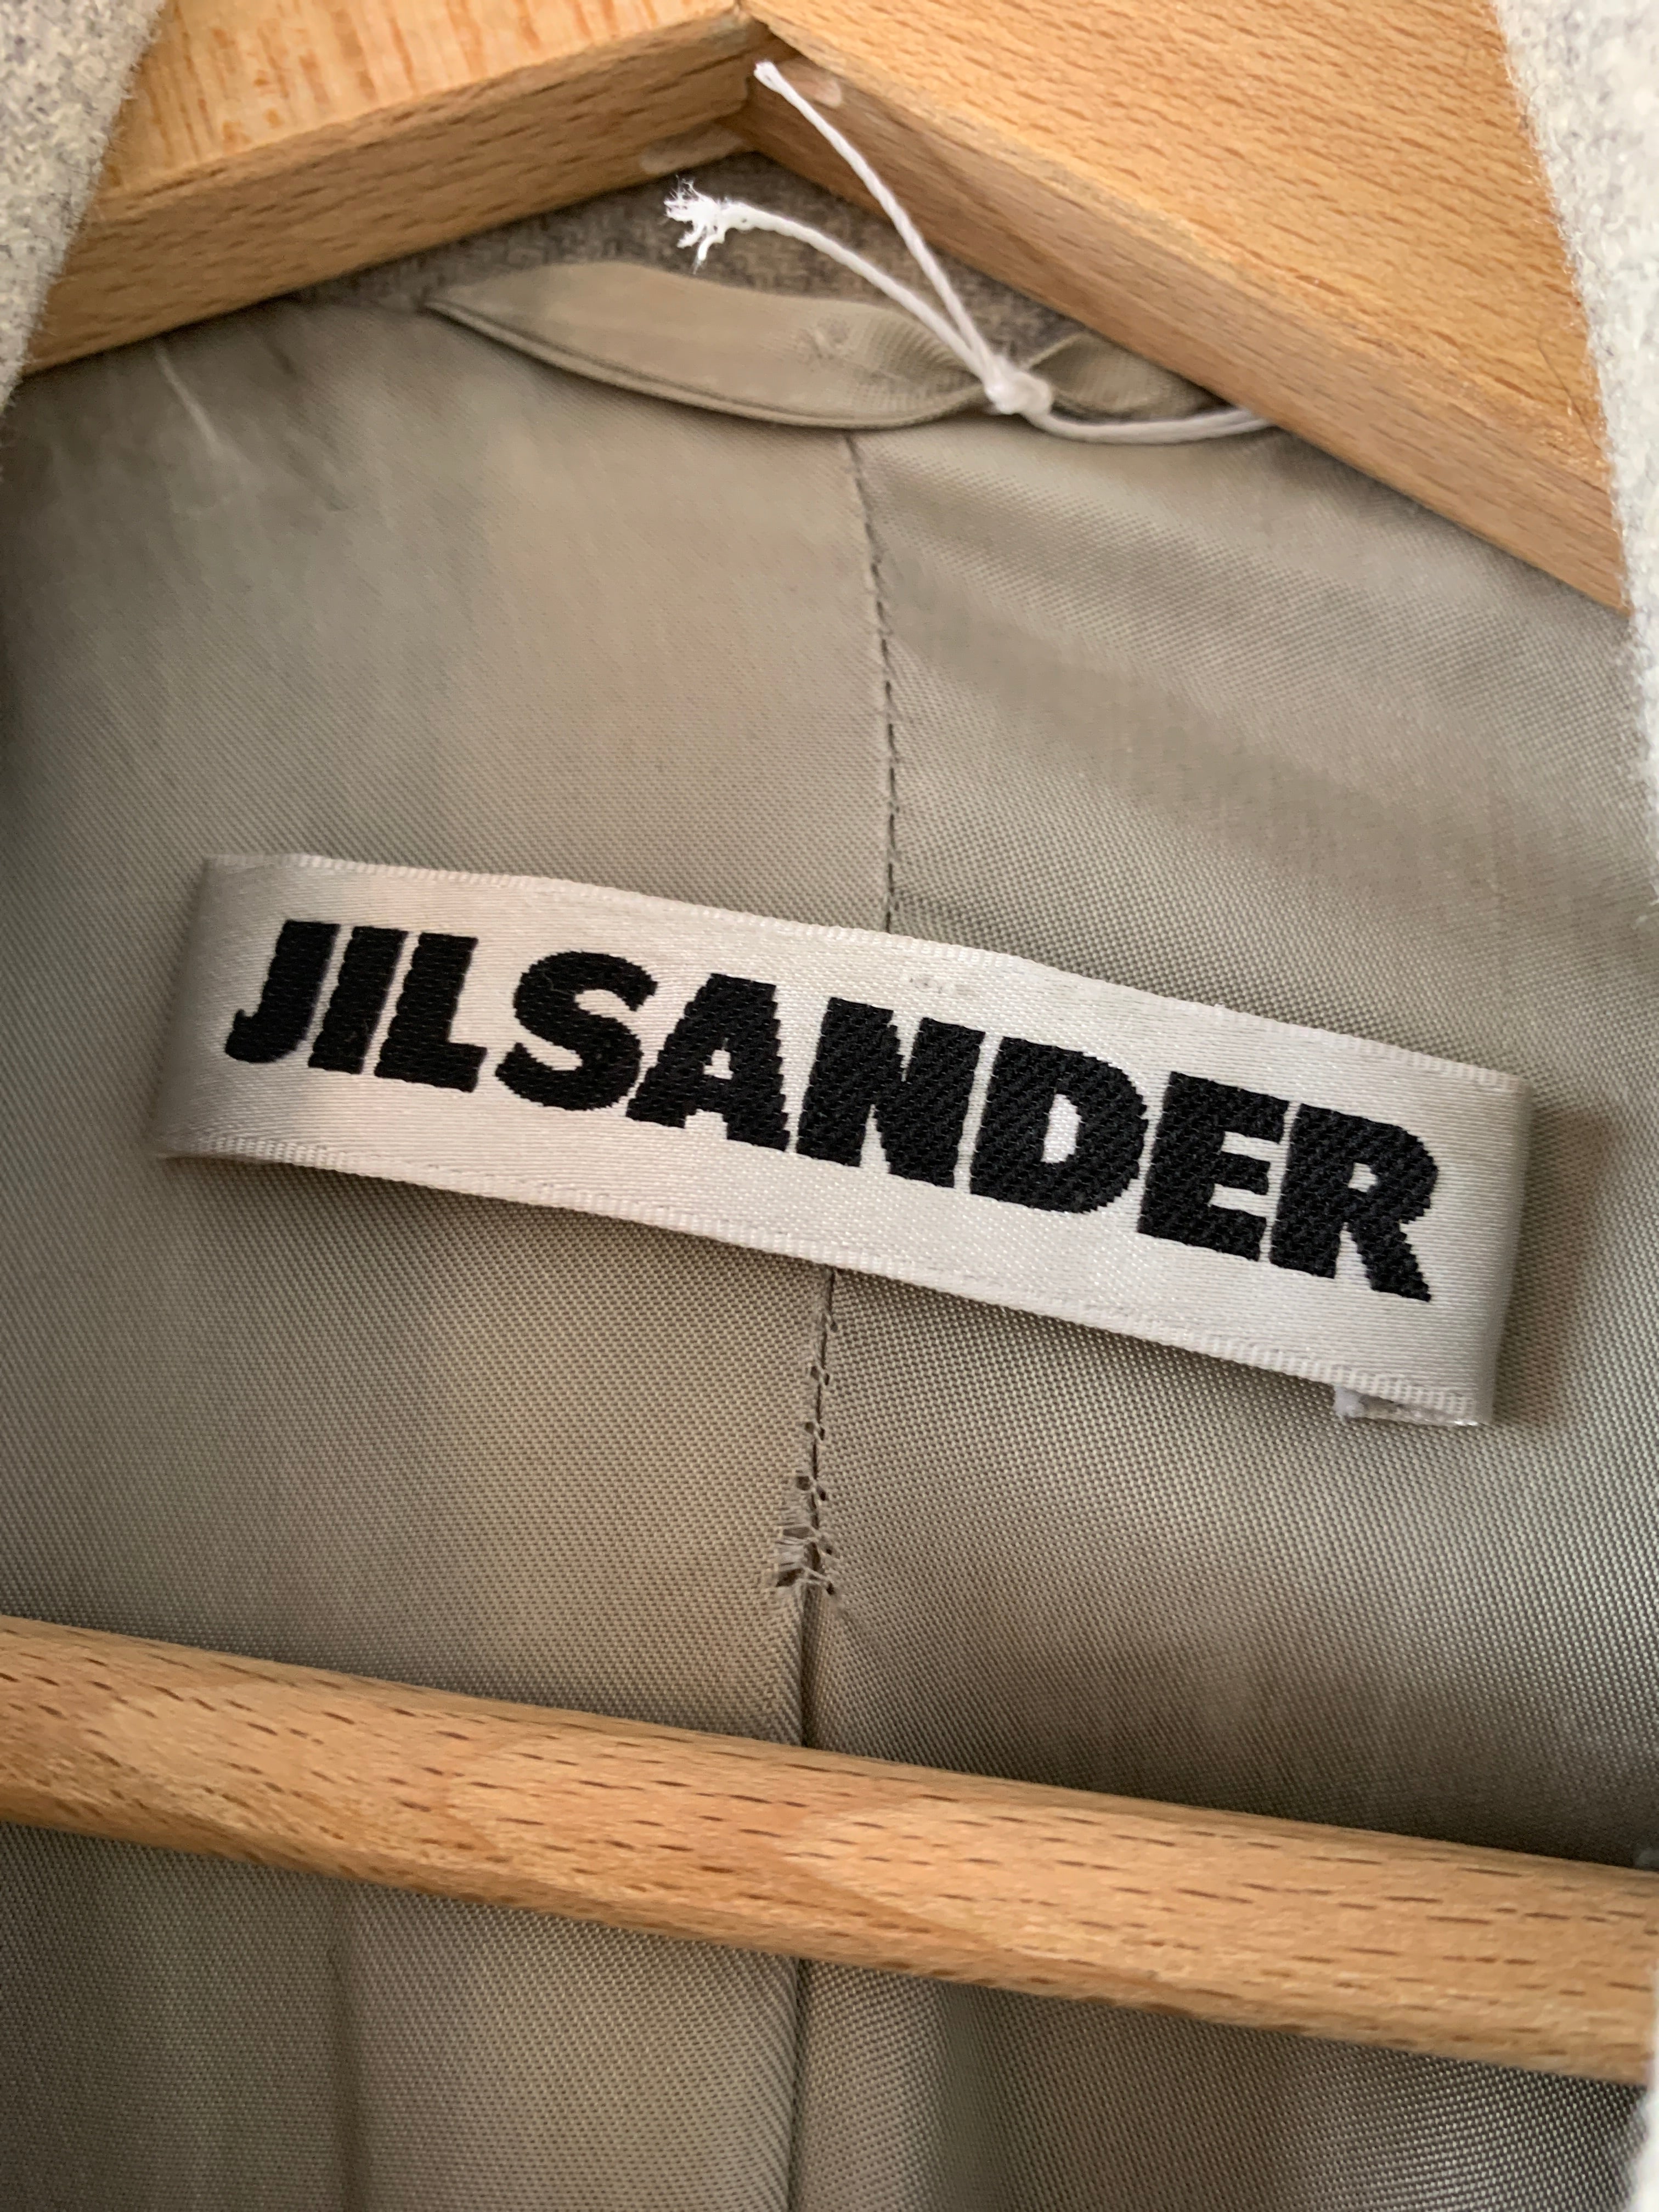 Jil Sander minimal coat